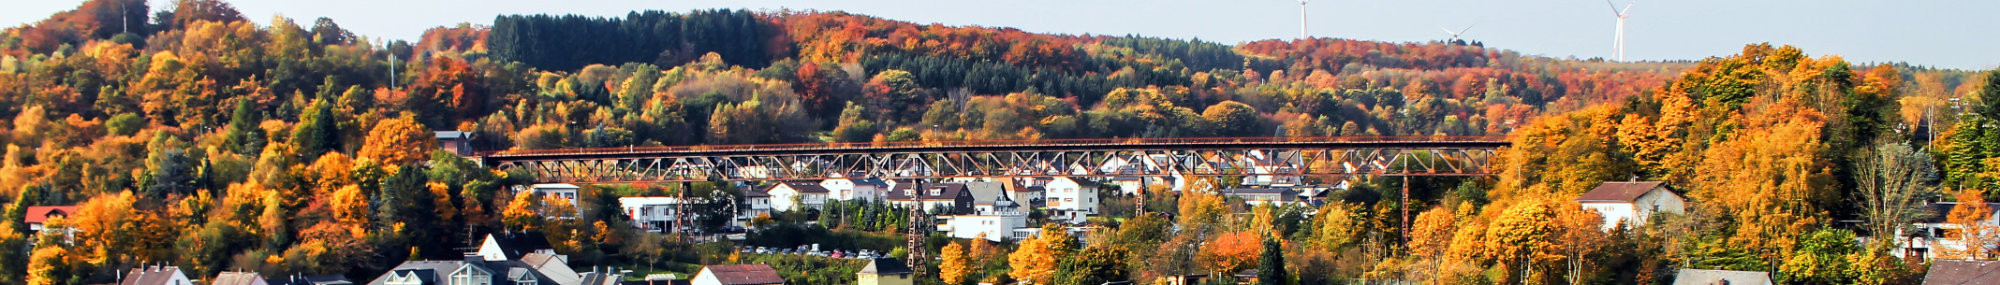 Panorama von Westerburg